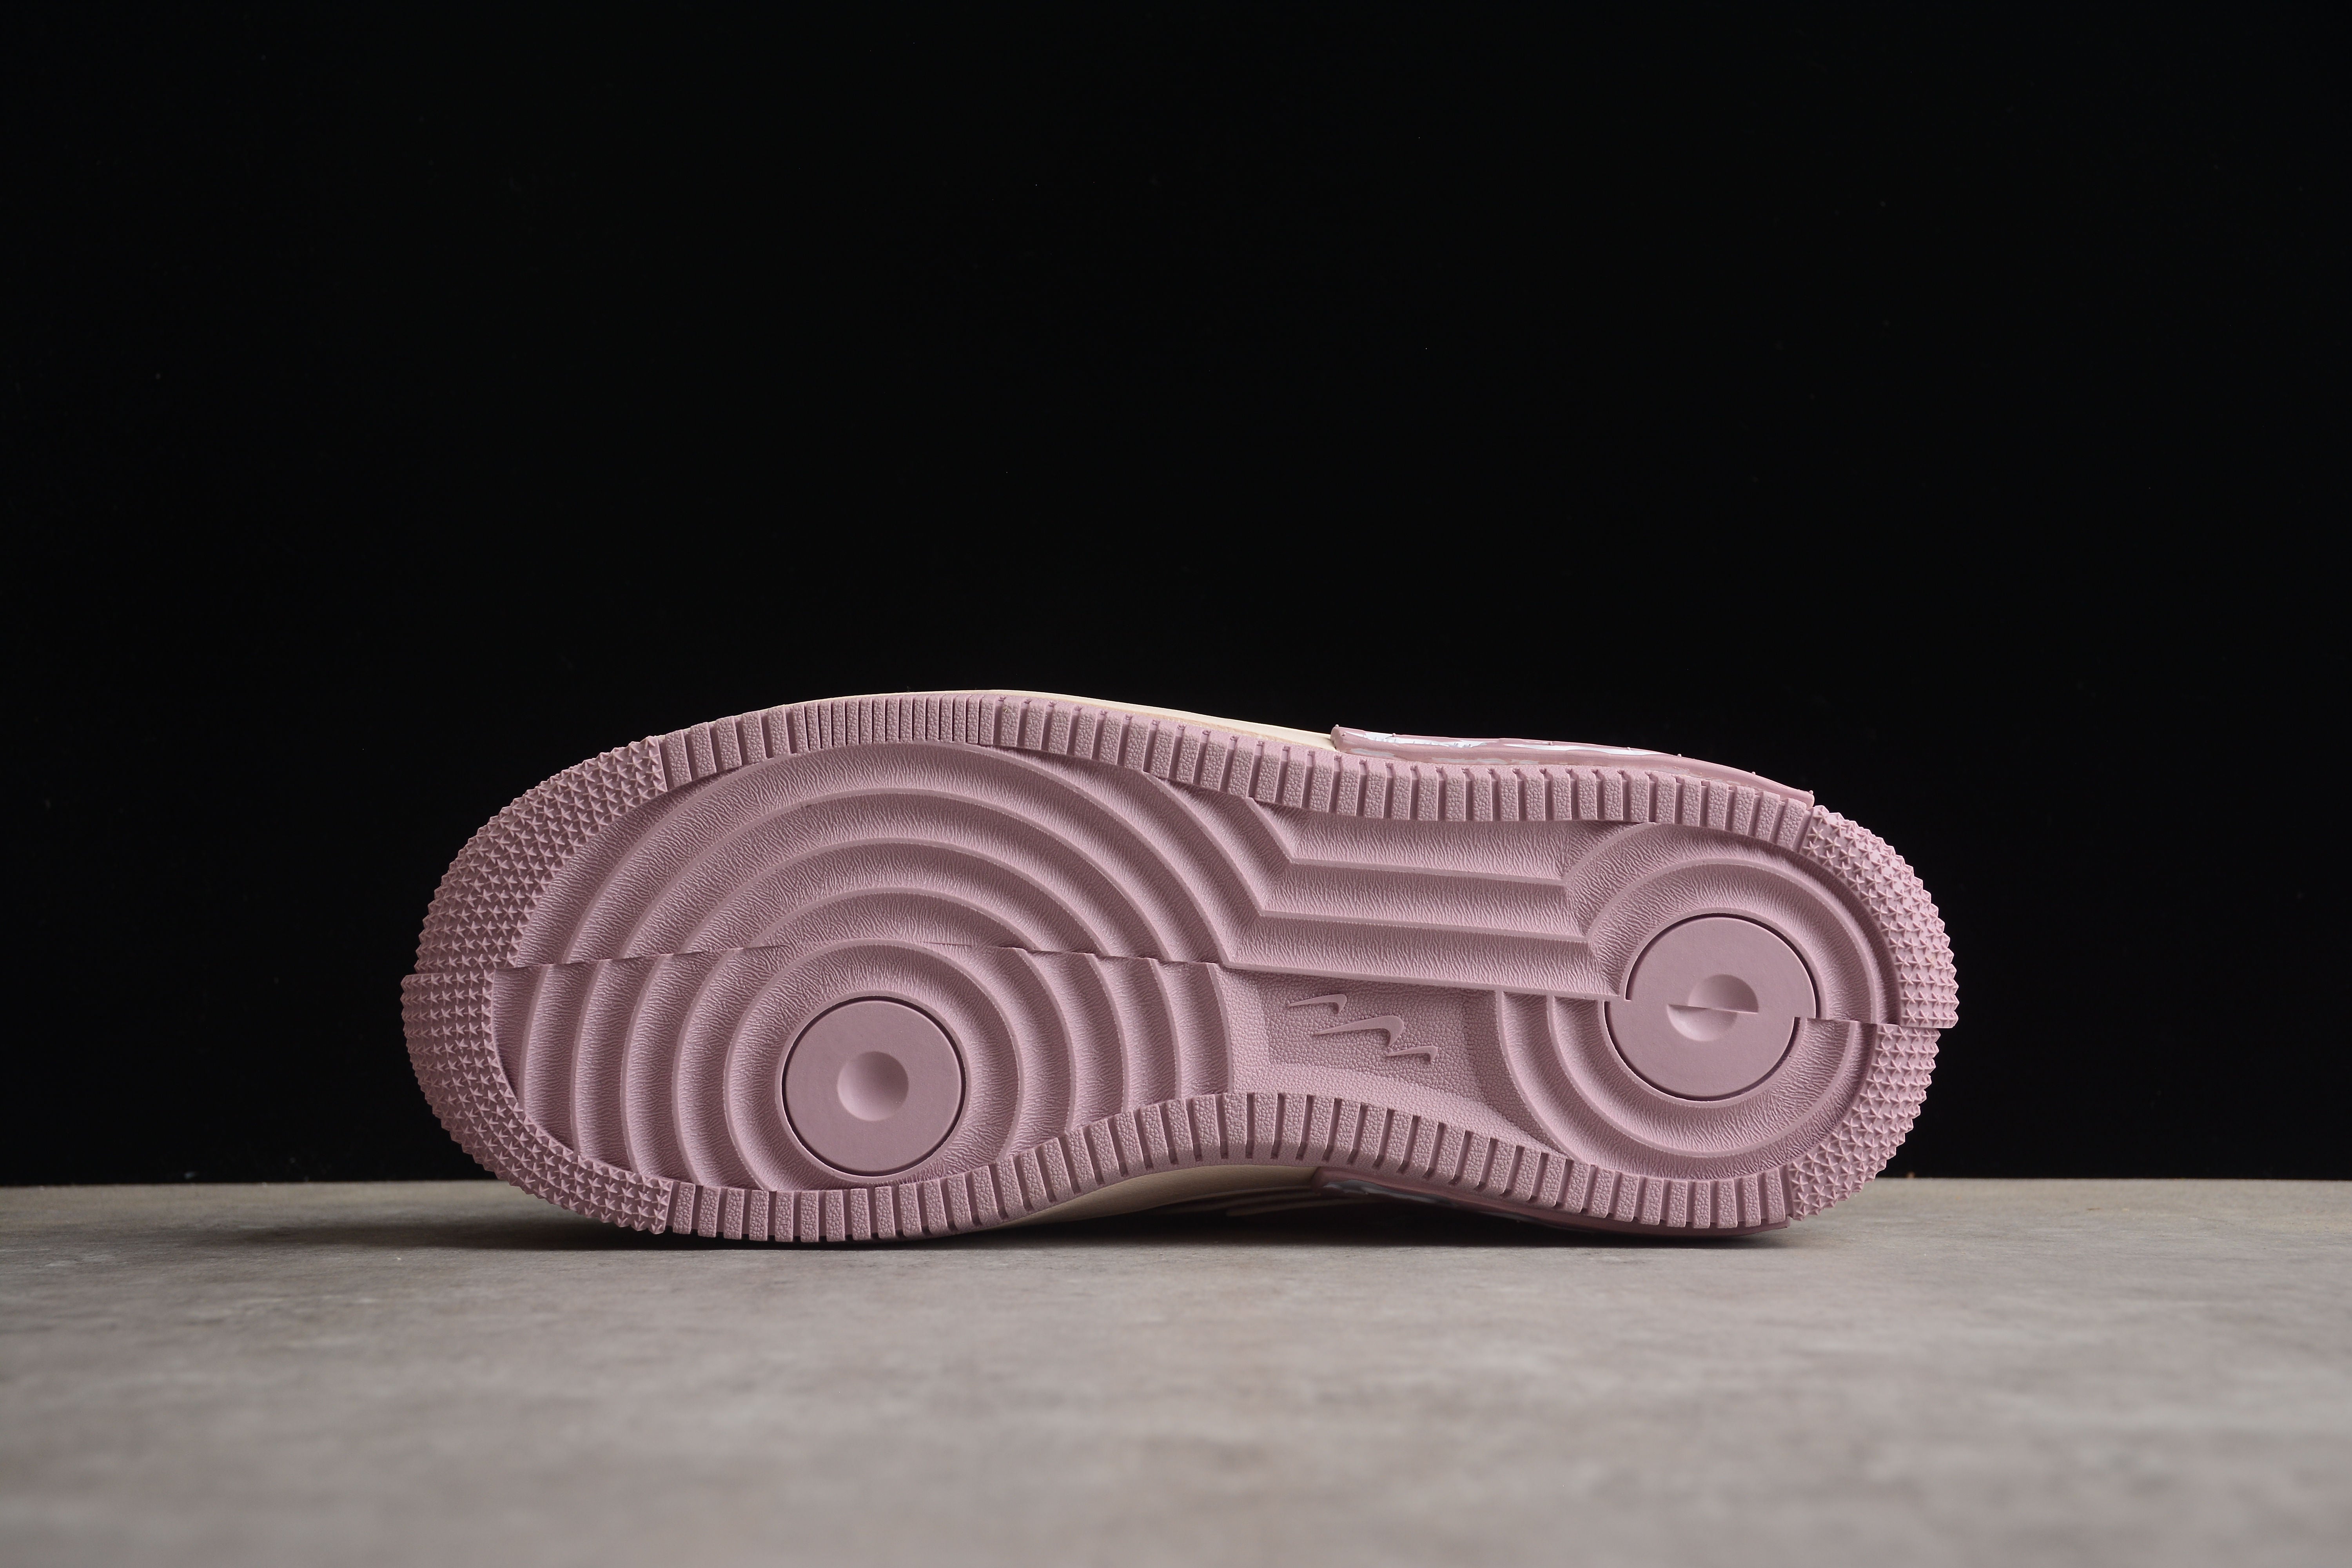 Nike airforce A1 purple shoes